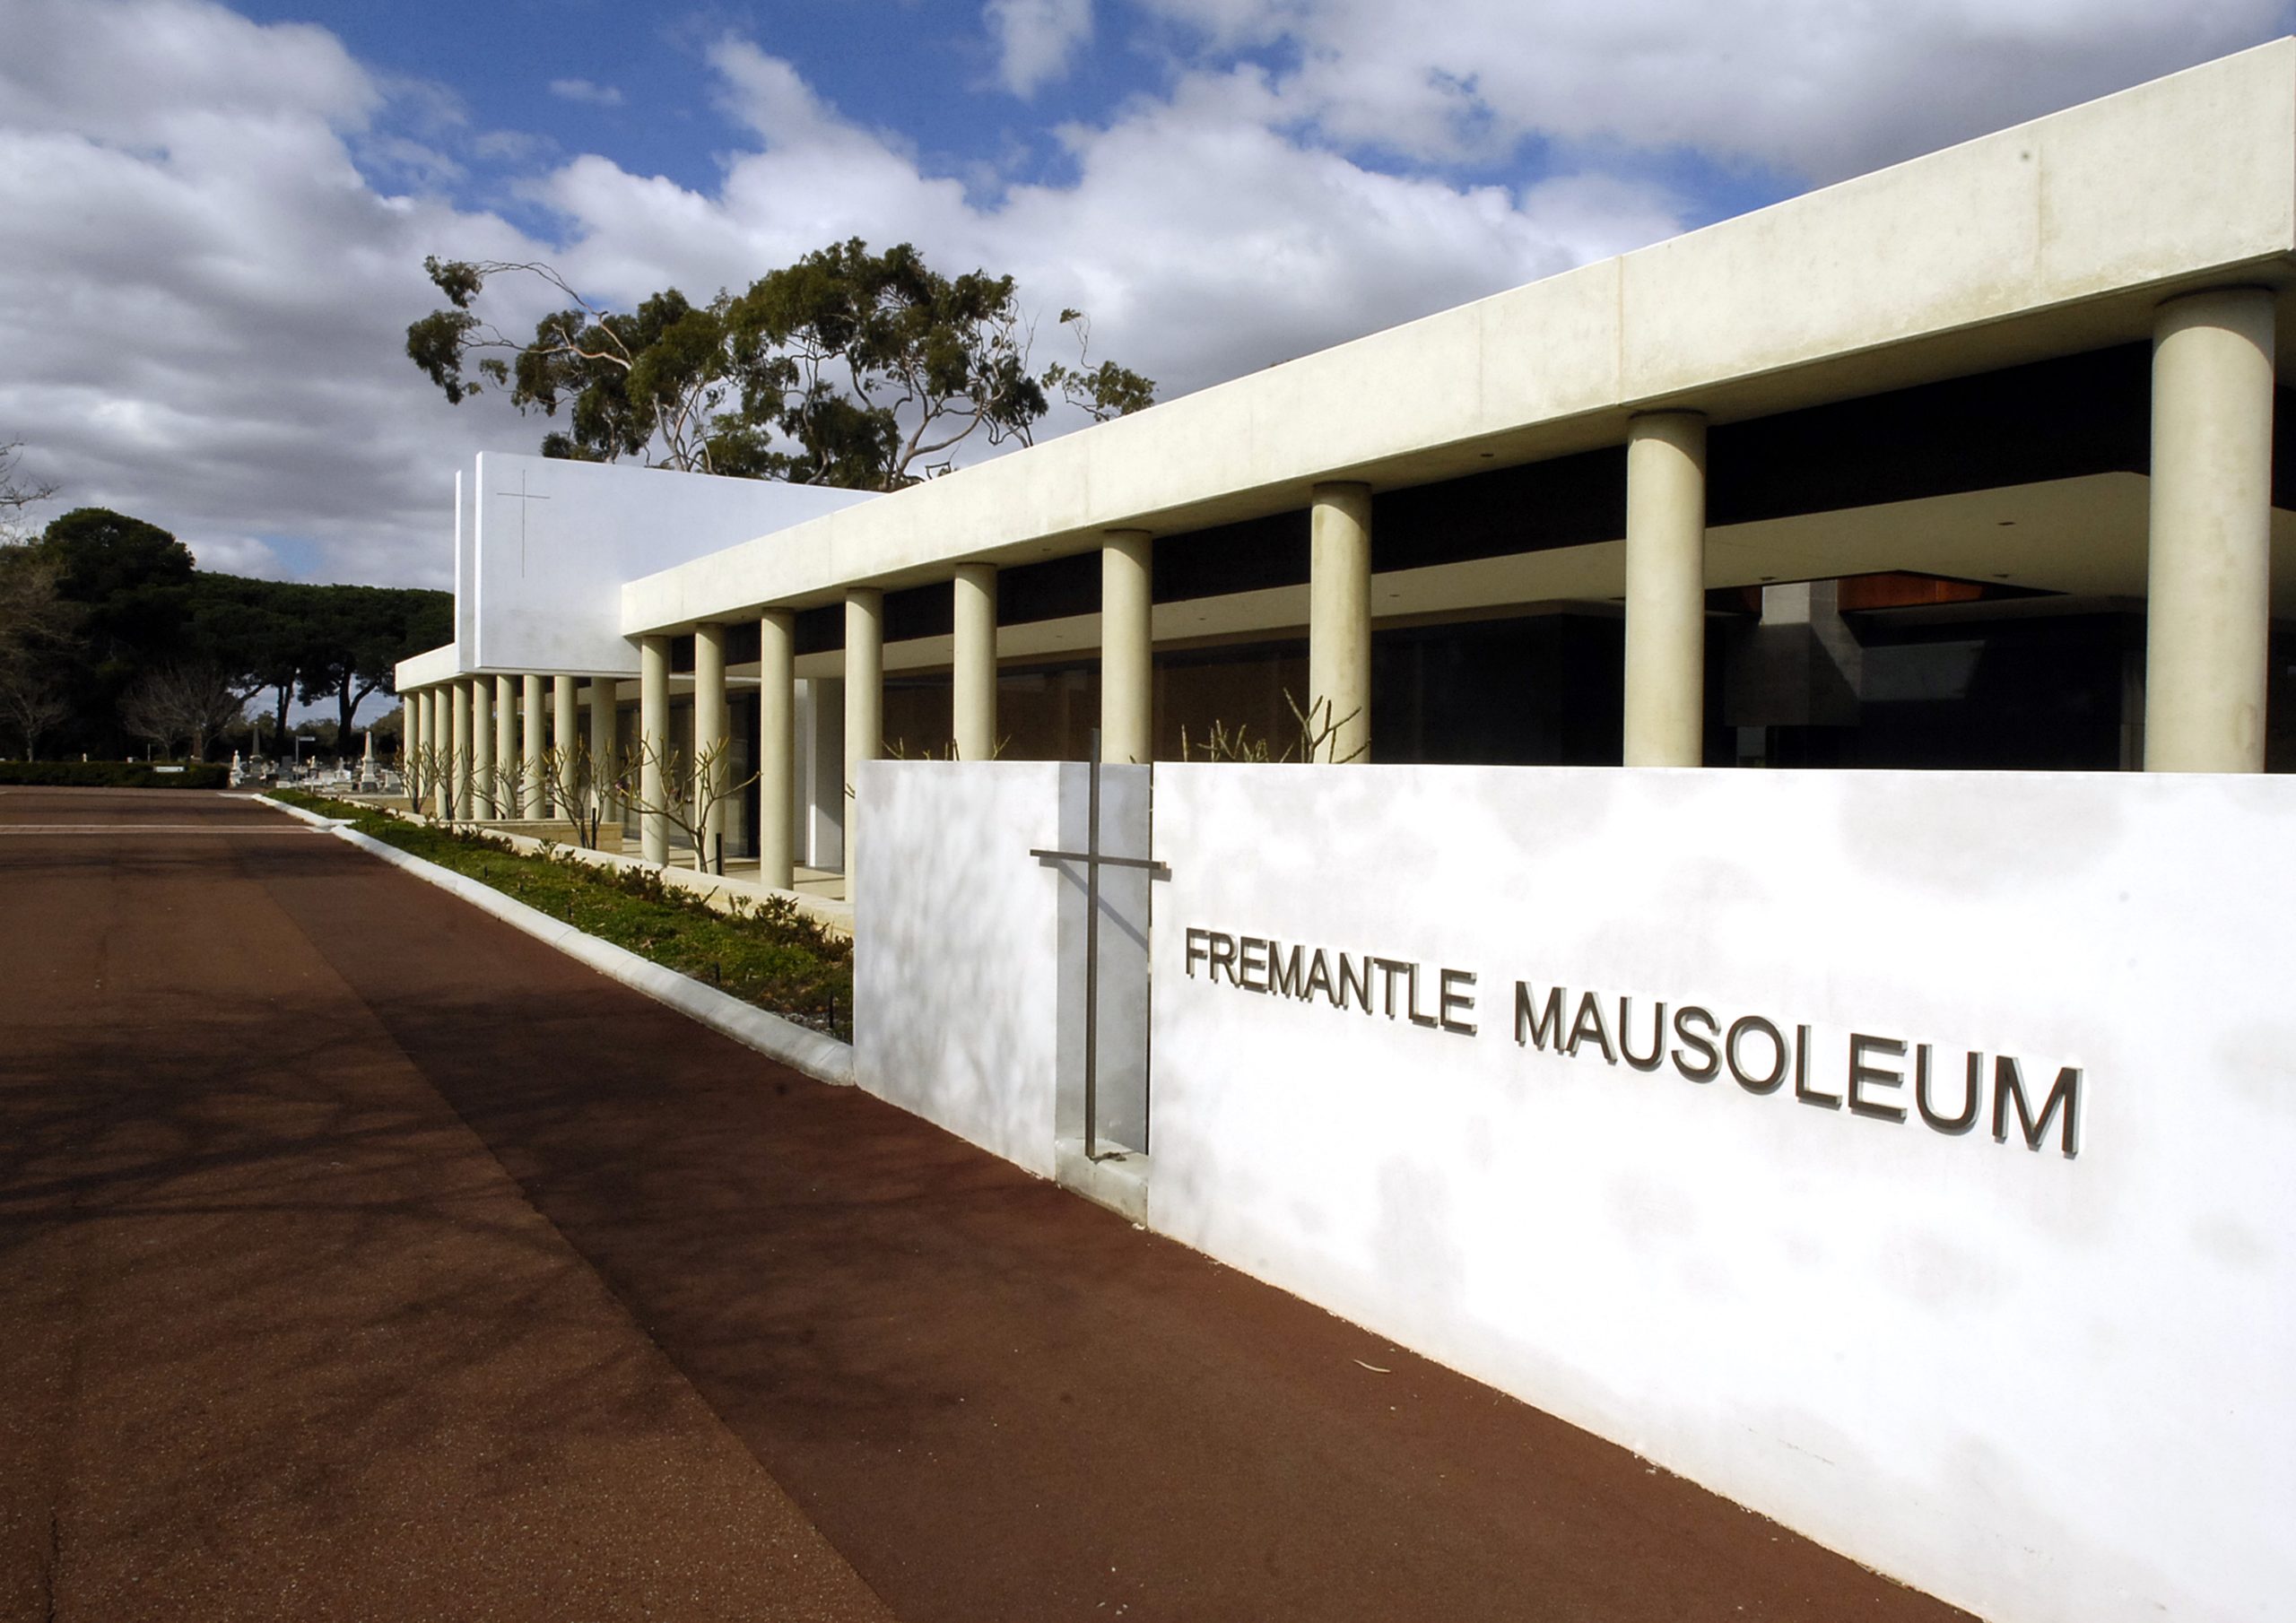 Fremantle Mausoleum